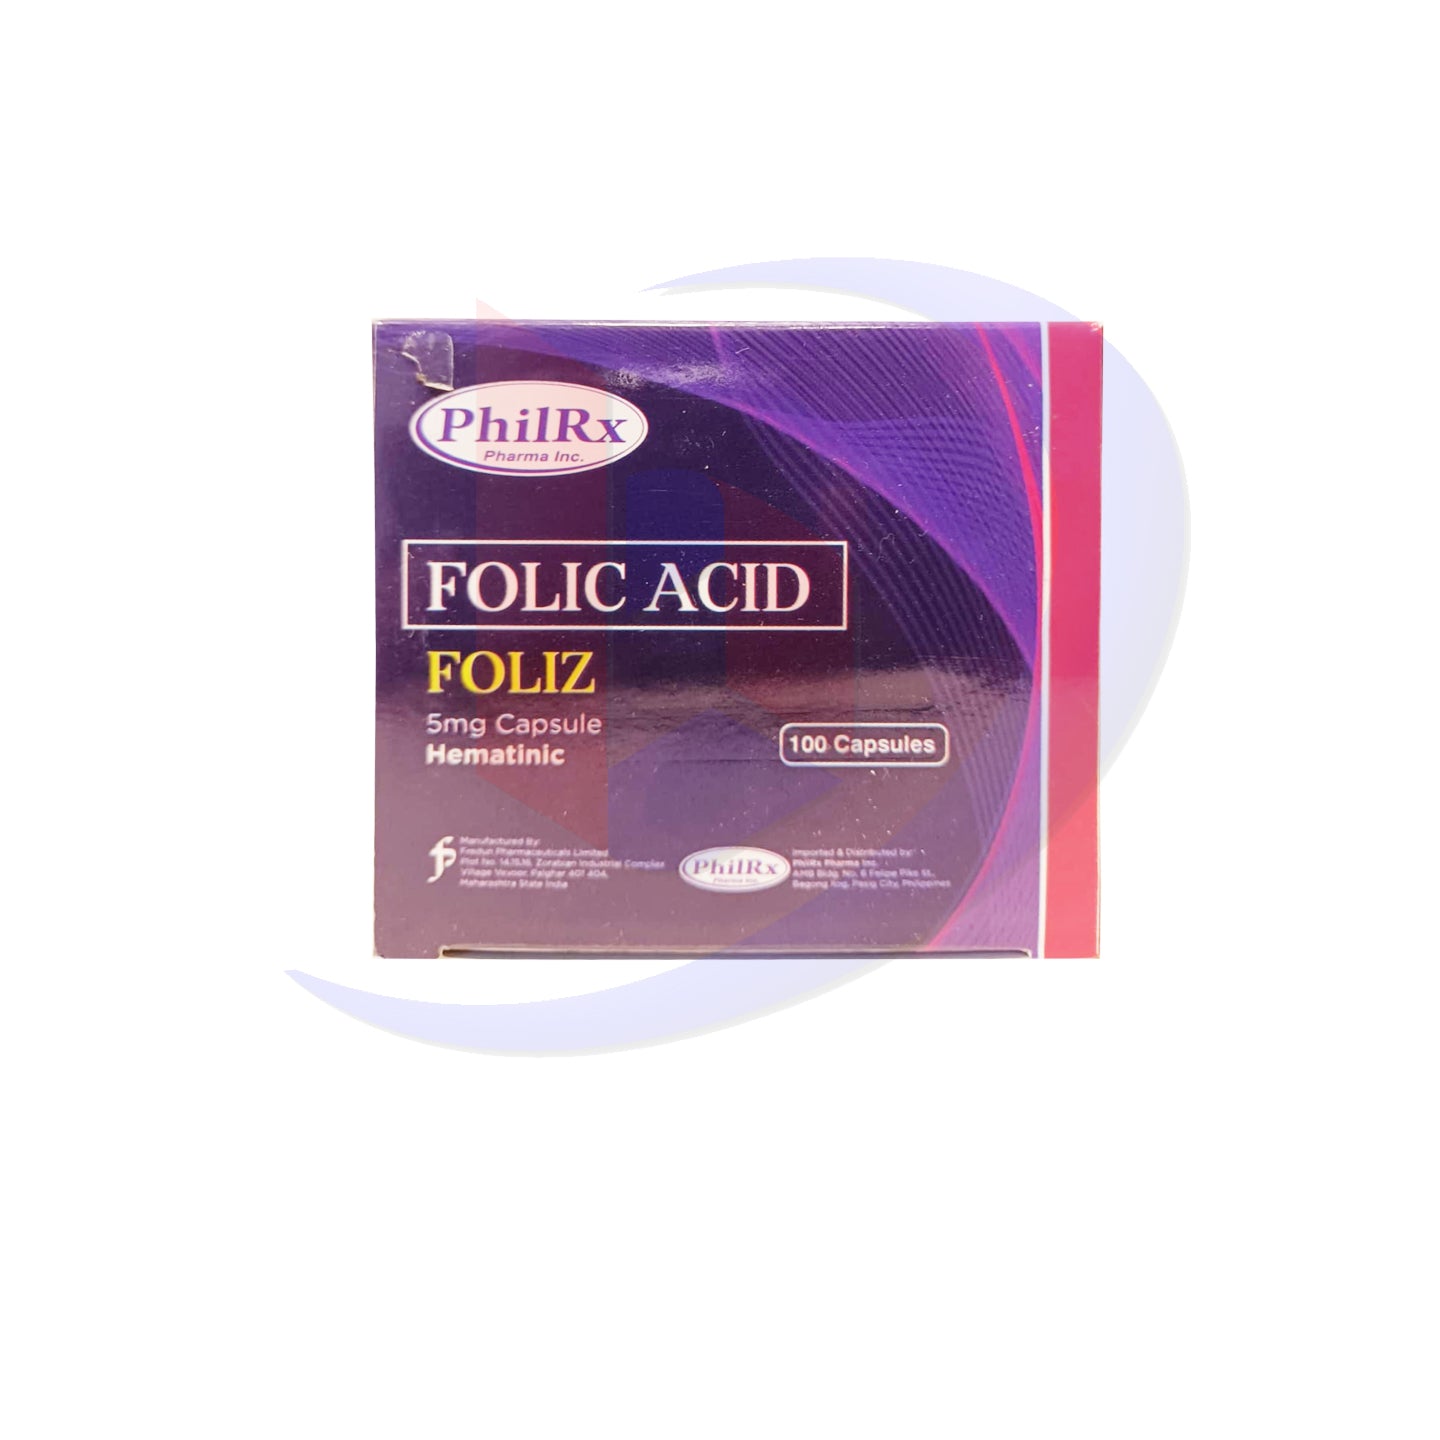 Folic Acid (Foliz) 5mg Capsule 100's